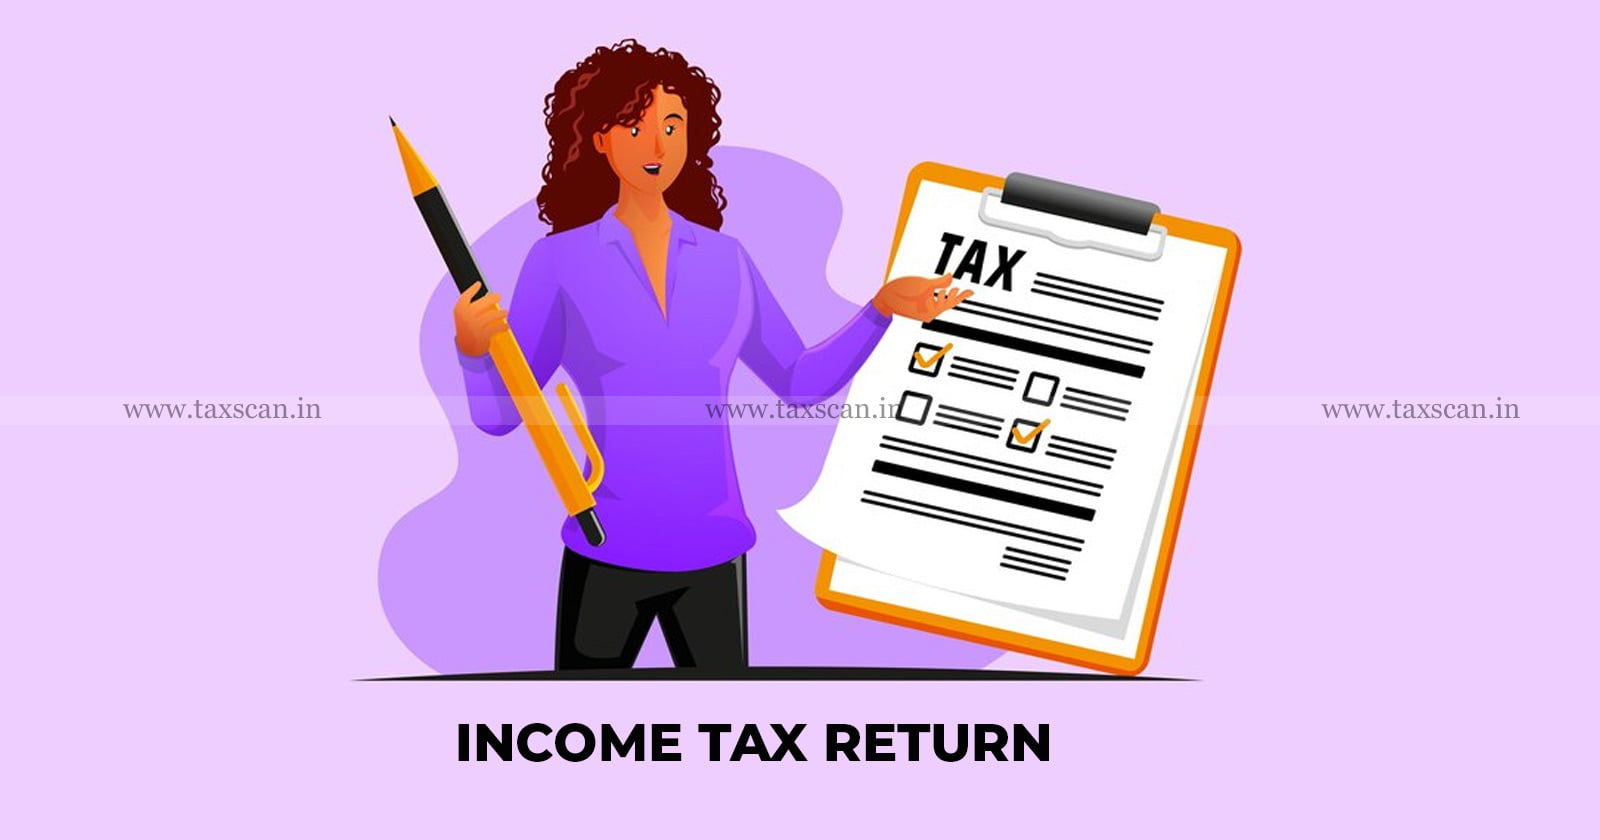 Typographical Error - Income Tax Return - ITAT - taxscan